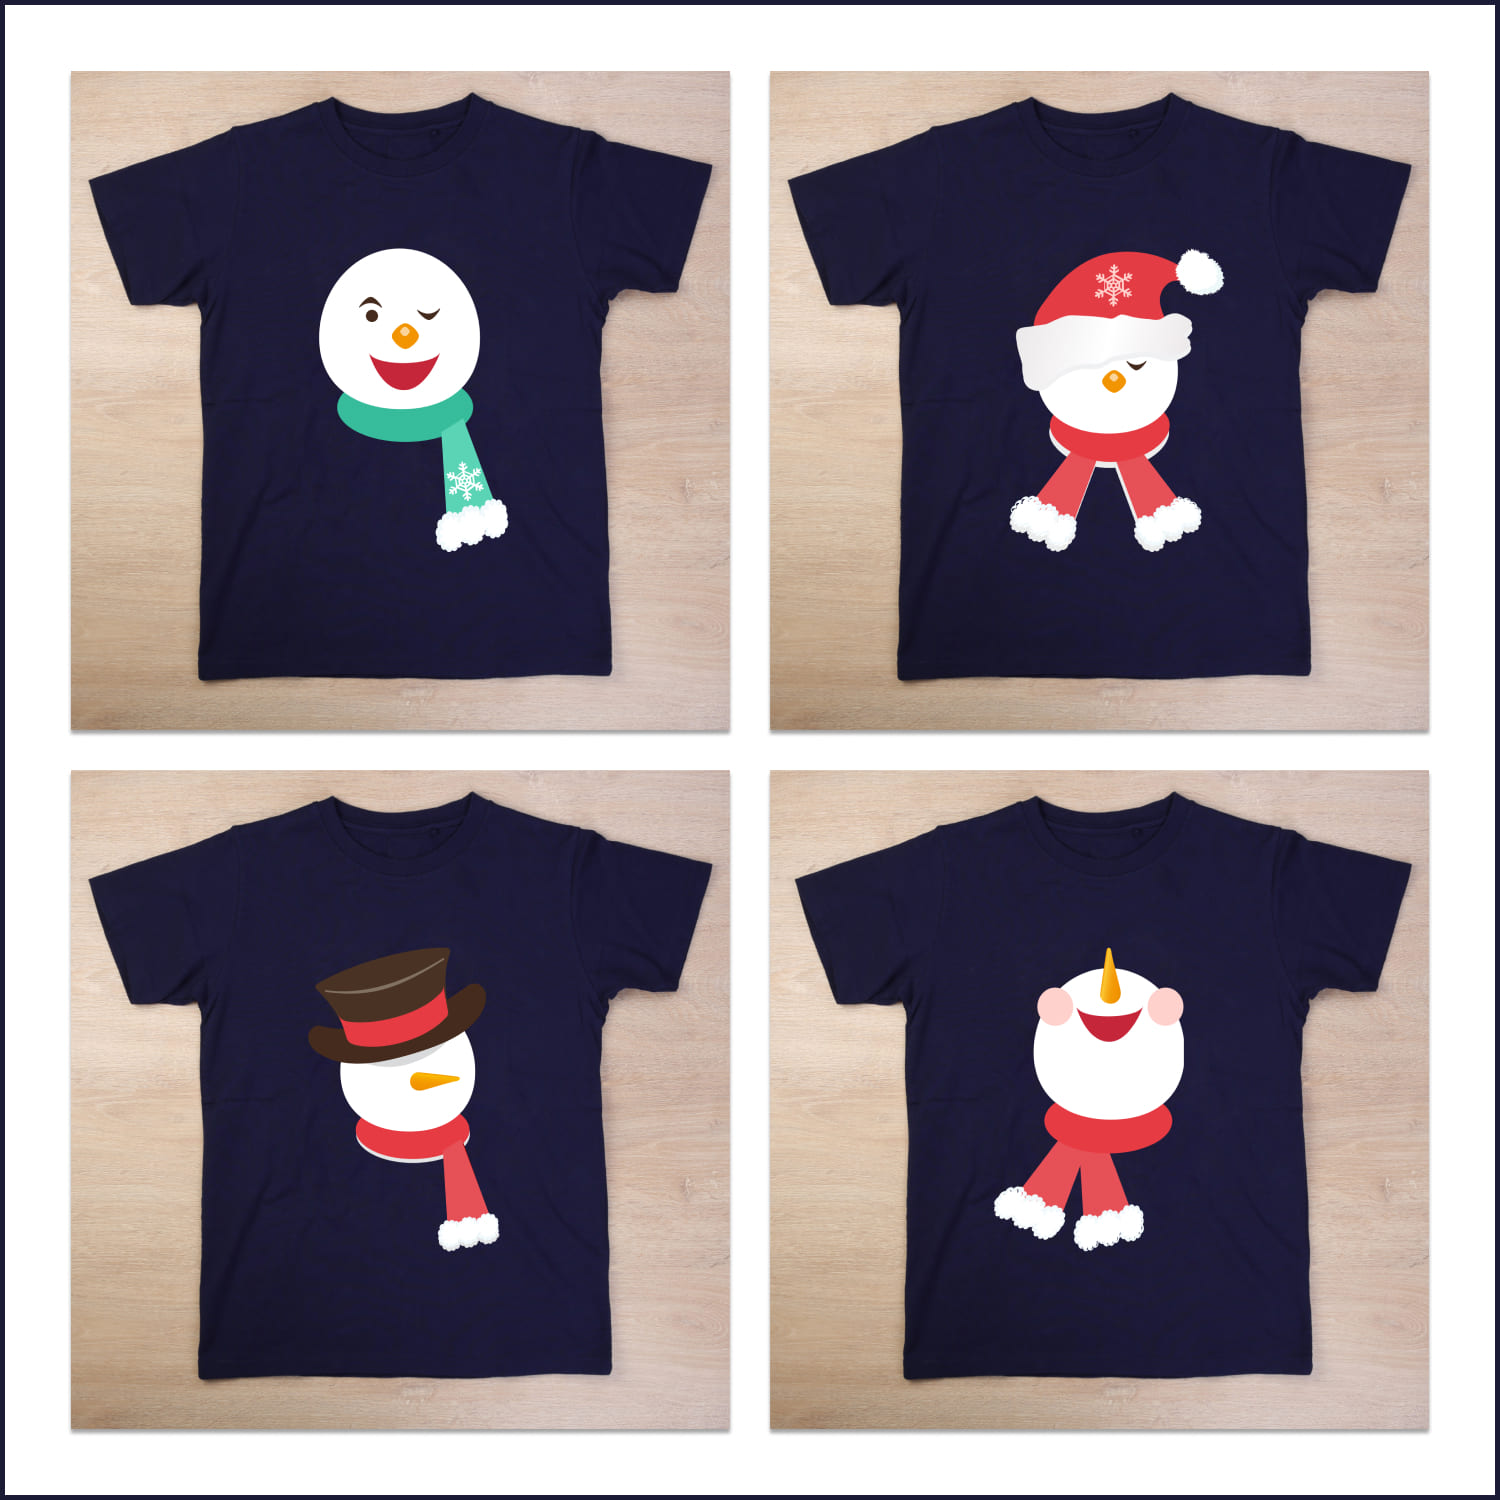 Snowman Face SVG T-shirt Designs cover.